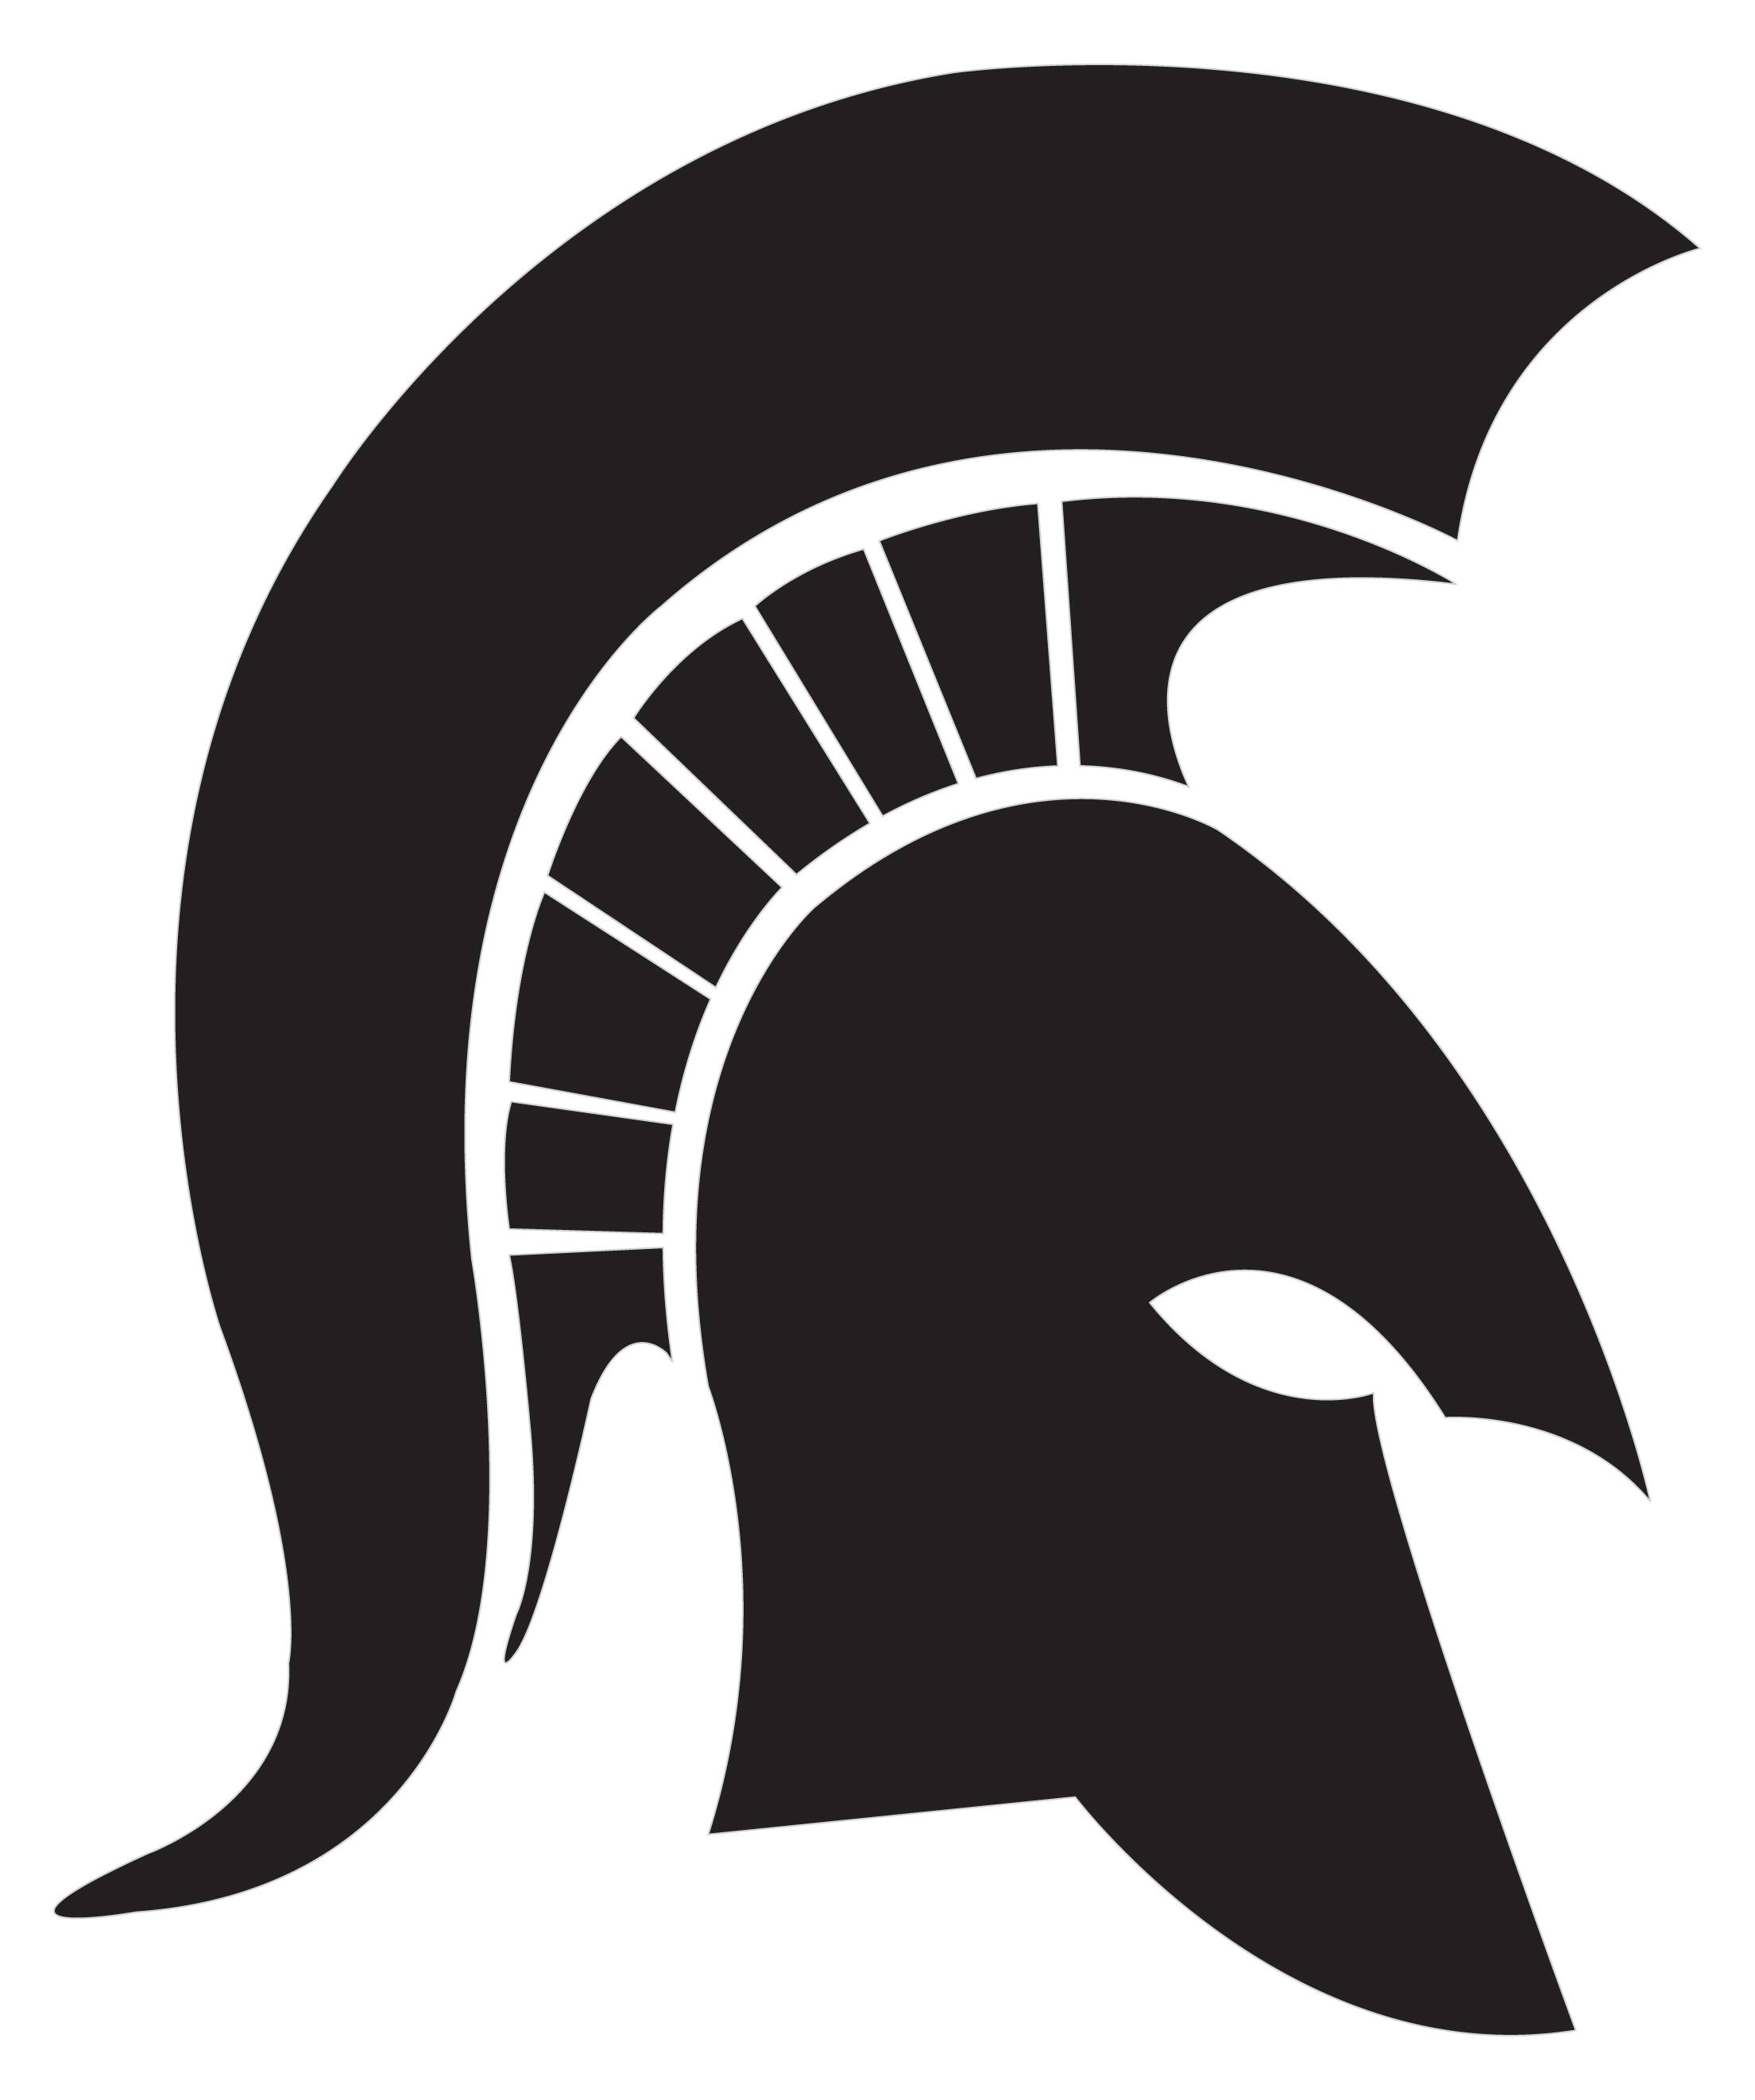 Clipart of the Black Spartan Helmet Logo free image.